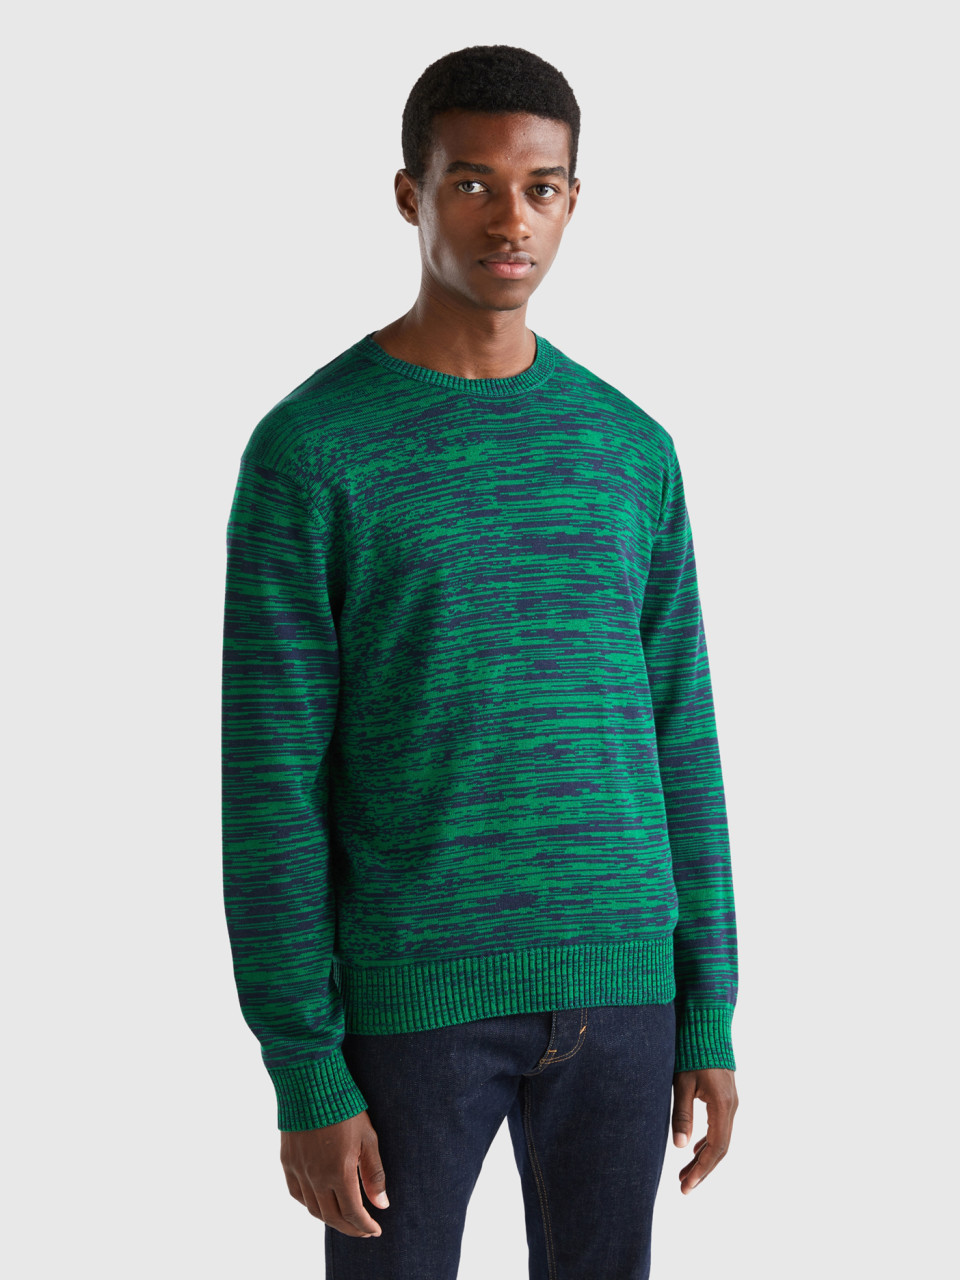 Benetton, Sweater With Striped Motif, Green, Men